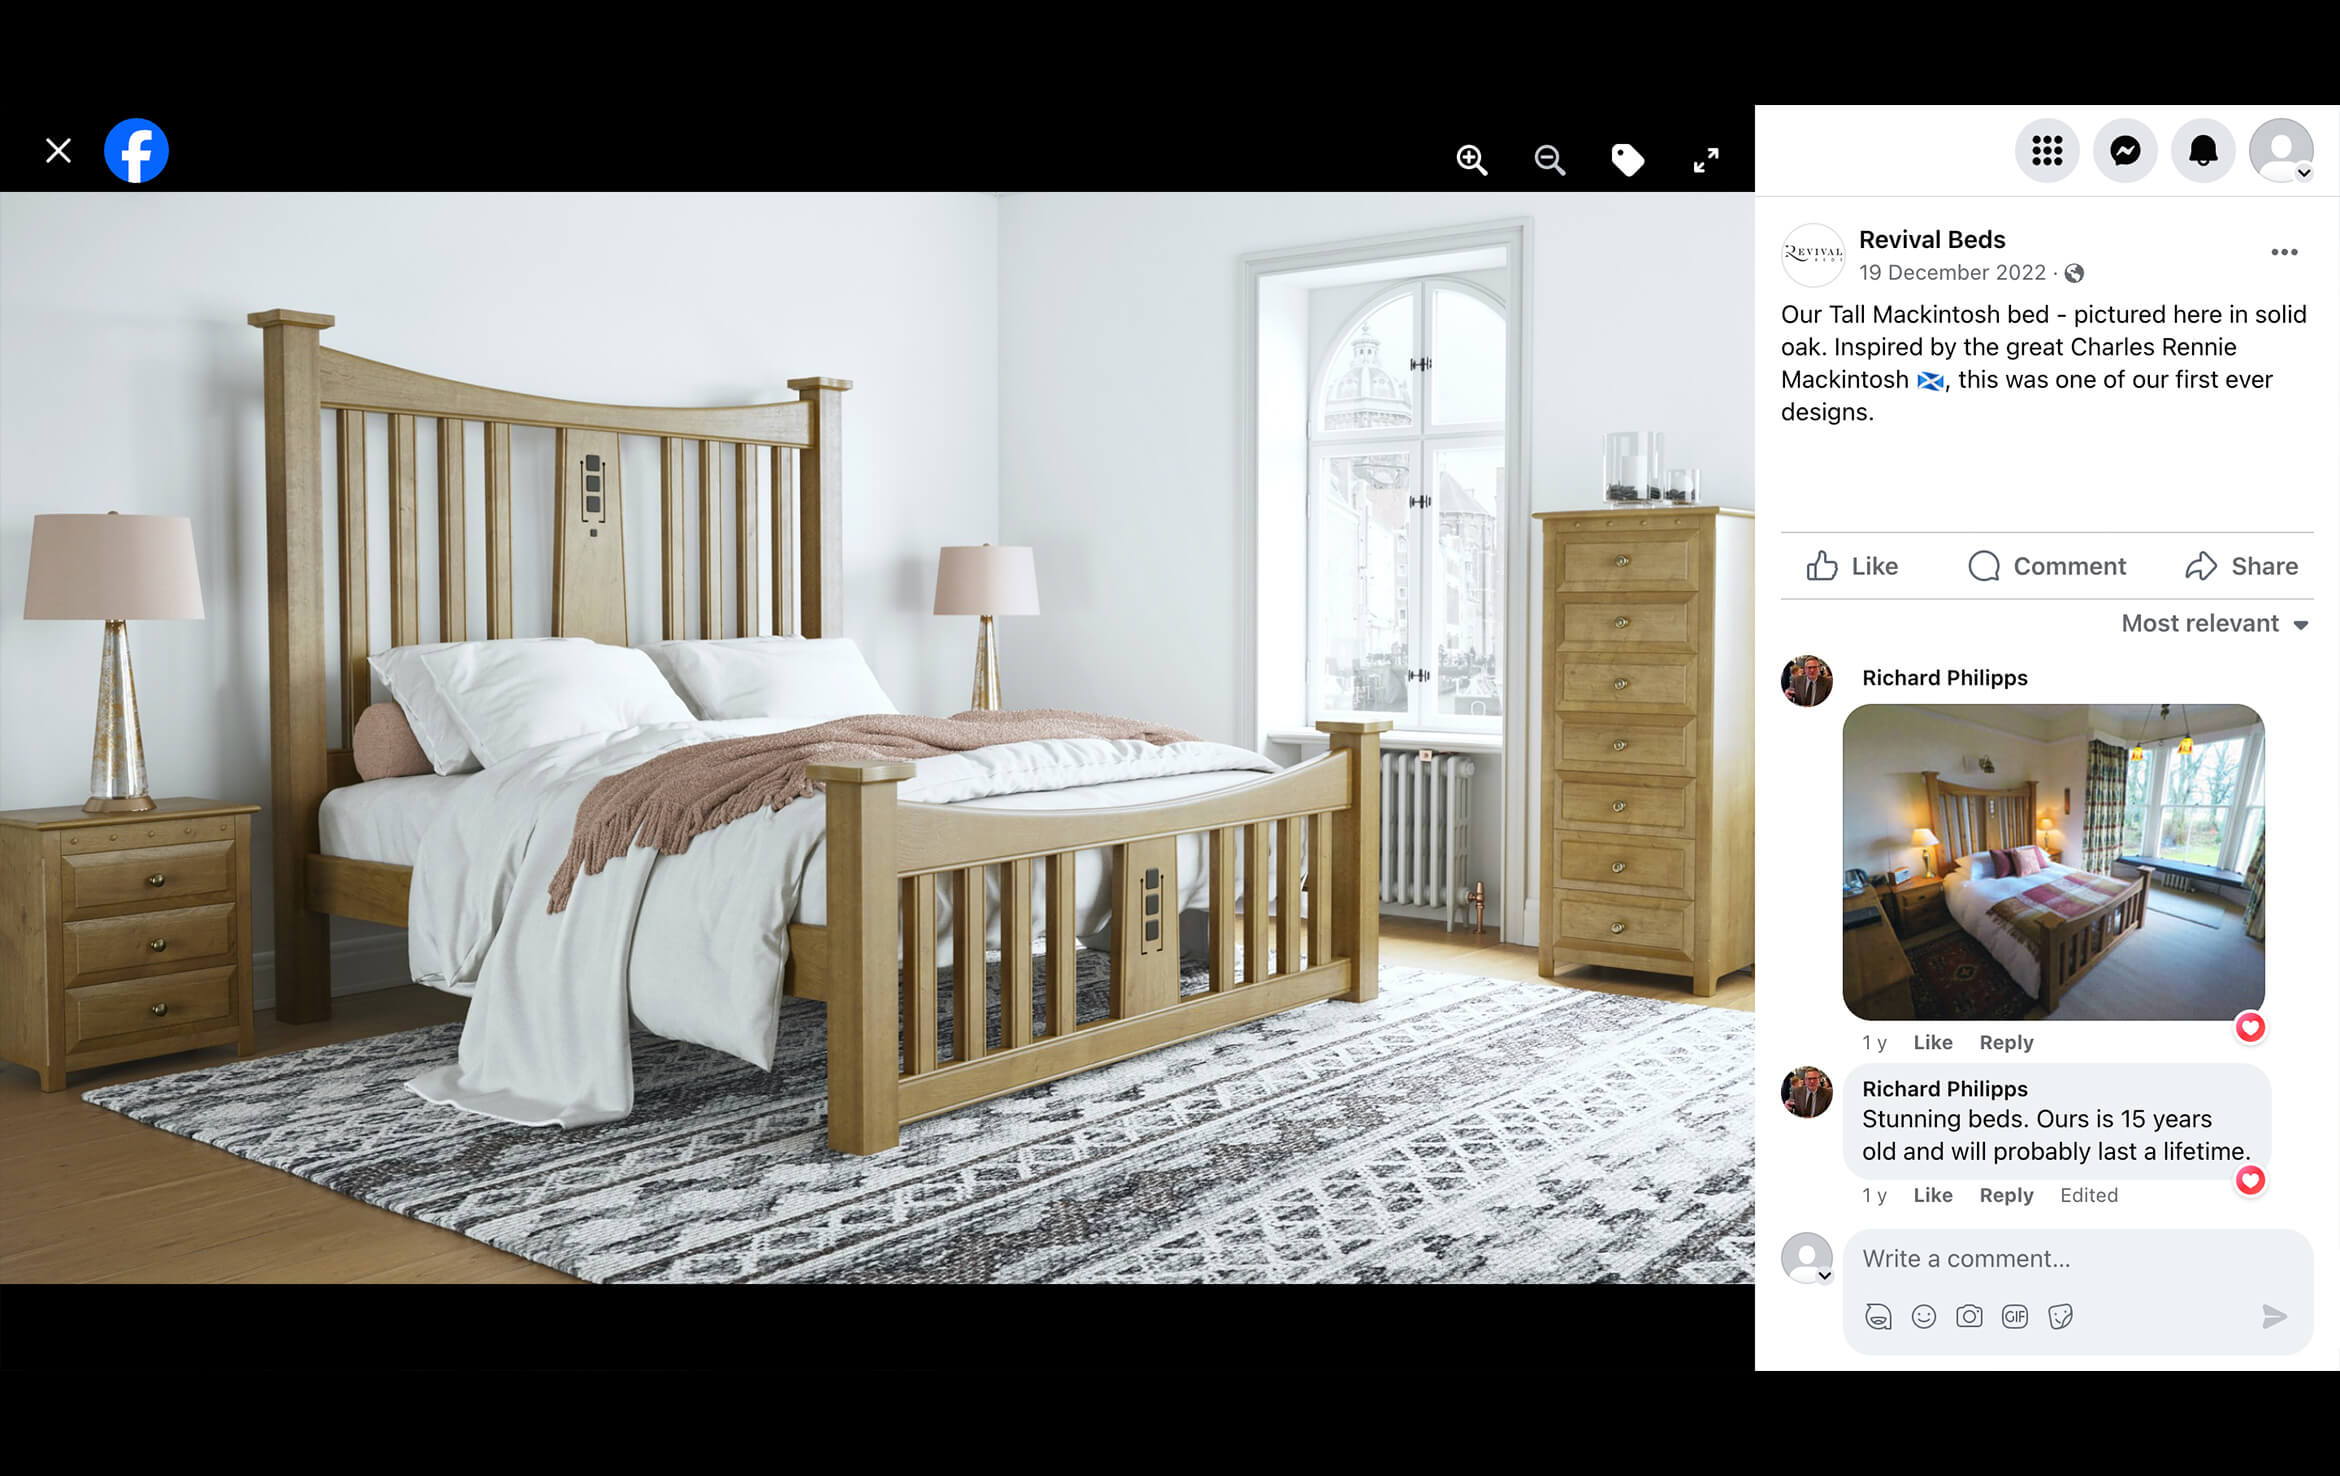 Bedroom Furniture Rendering for a Revival Beds' FB